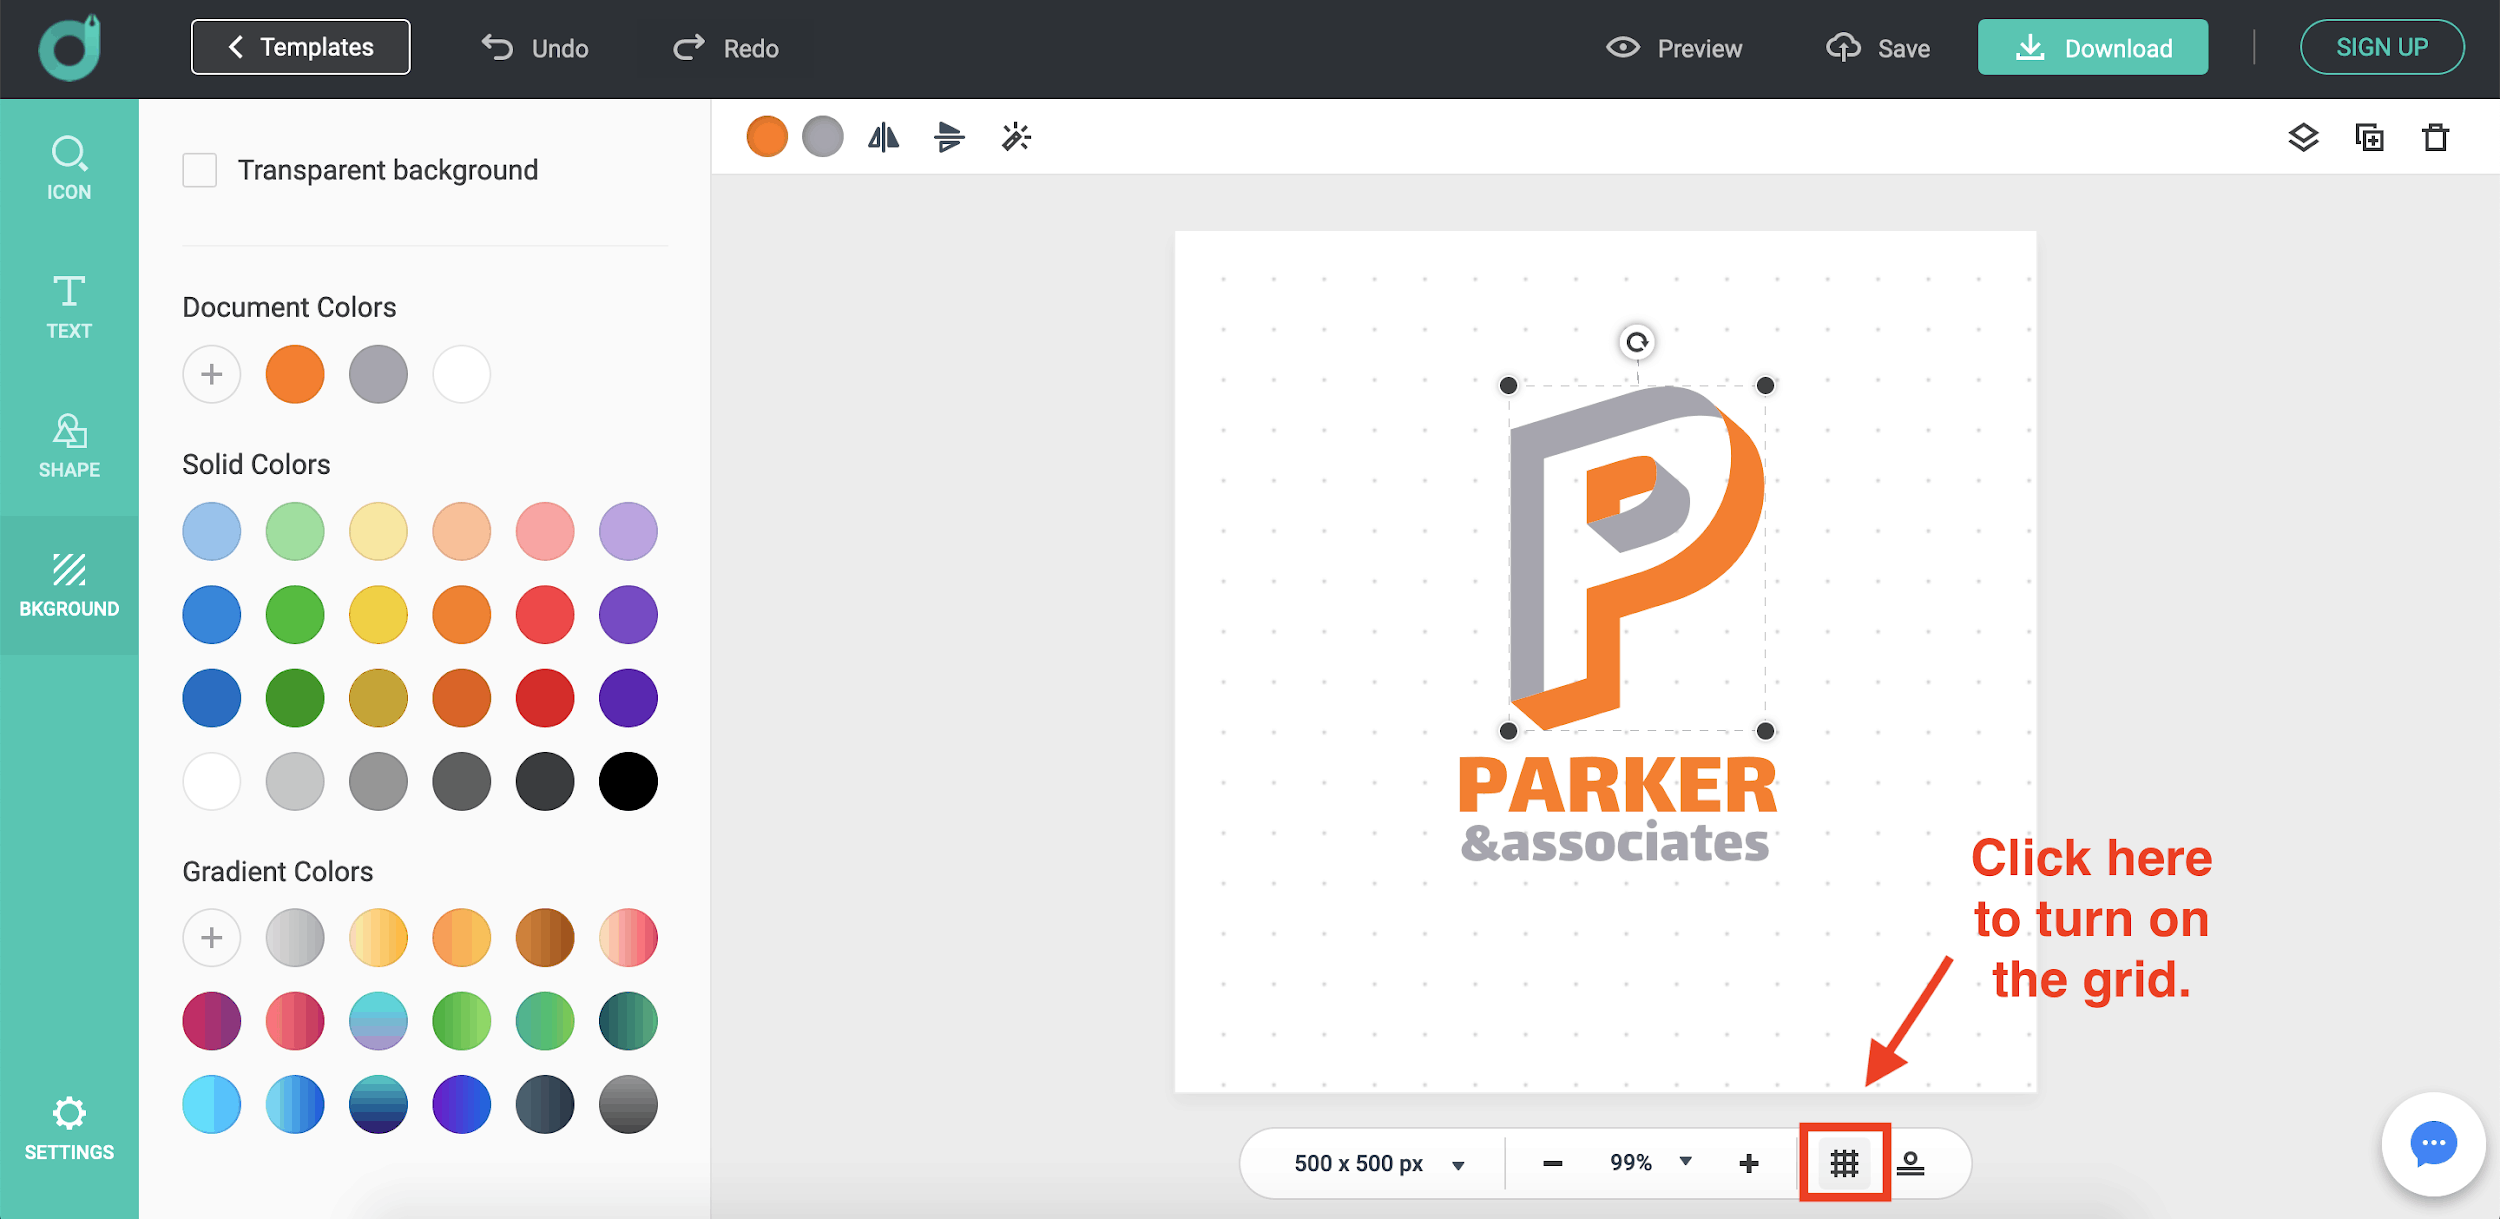 DesignEvo screenshot - Color palettes